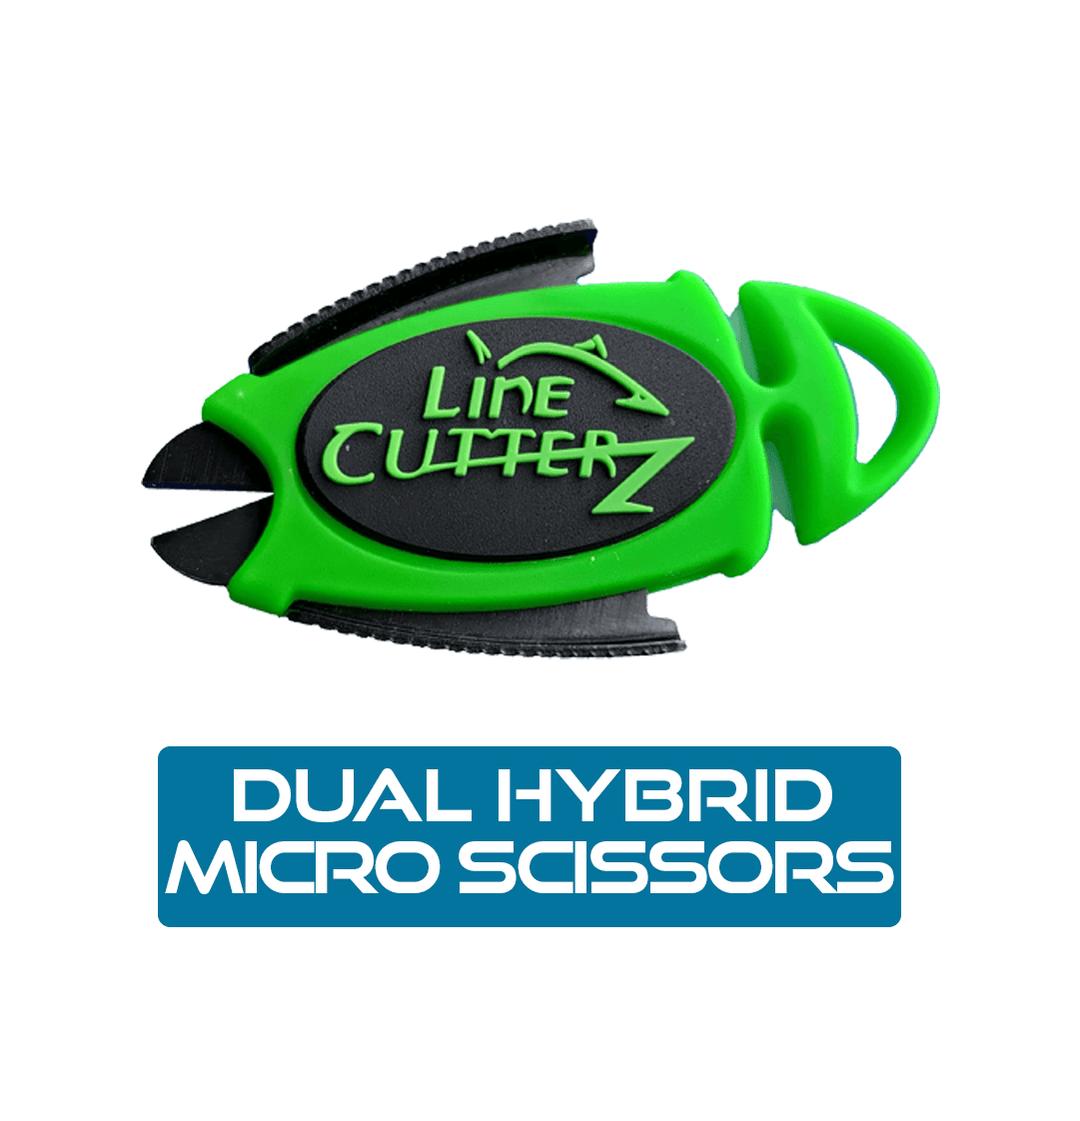 Dual Hybrid Micro Scissors